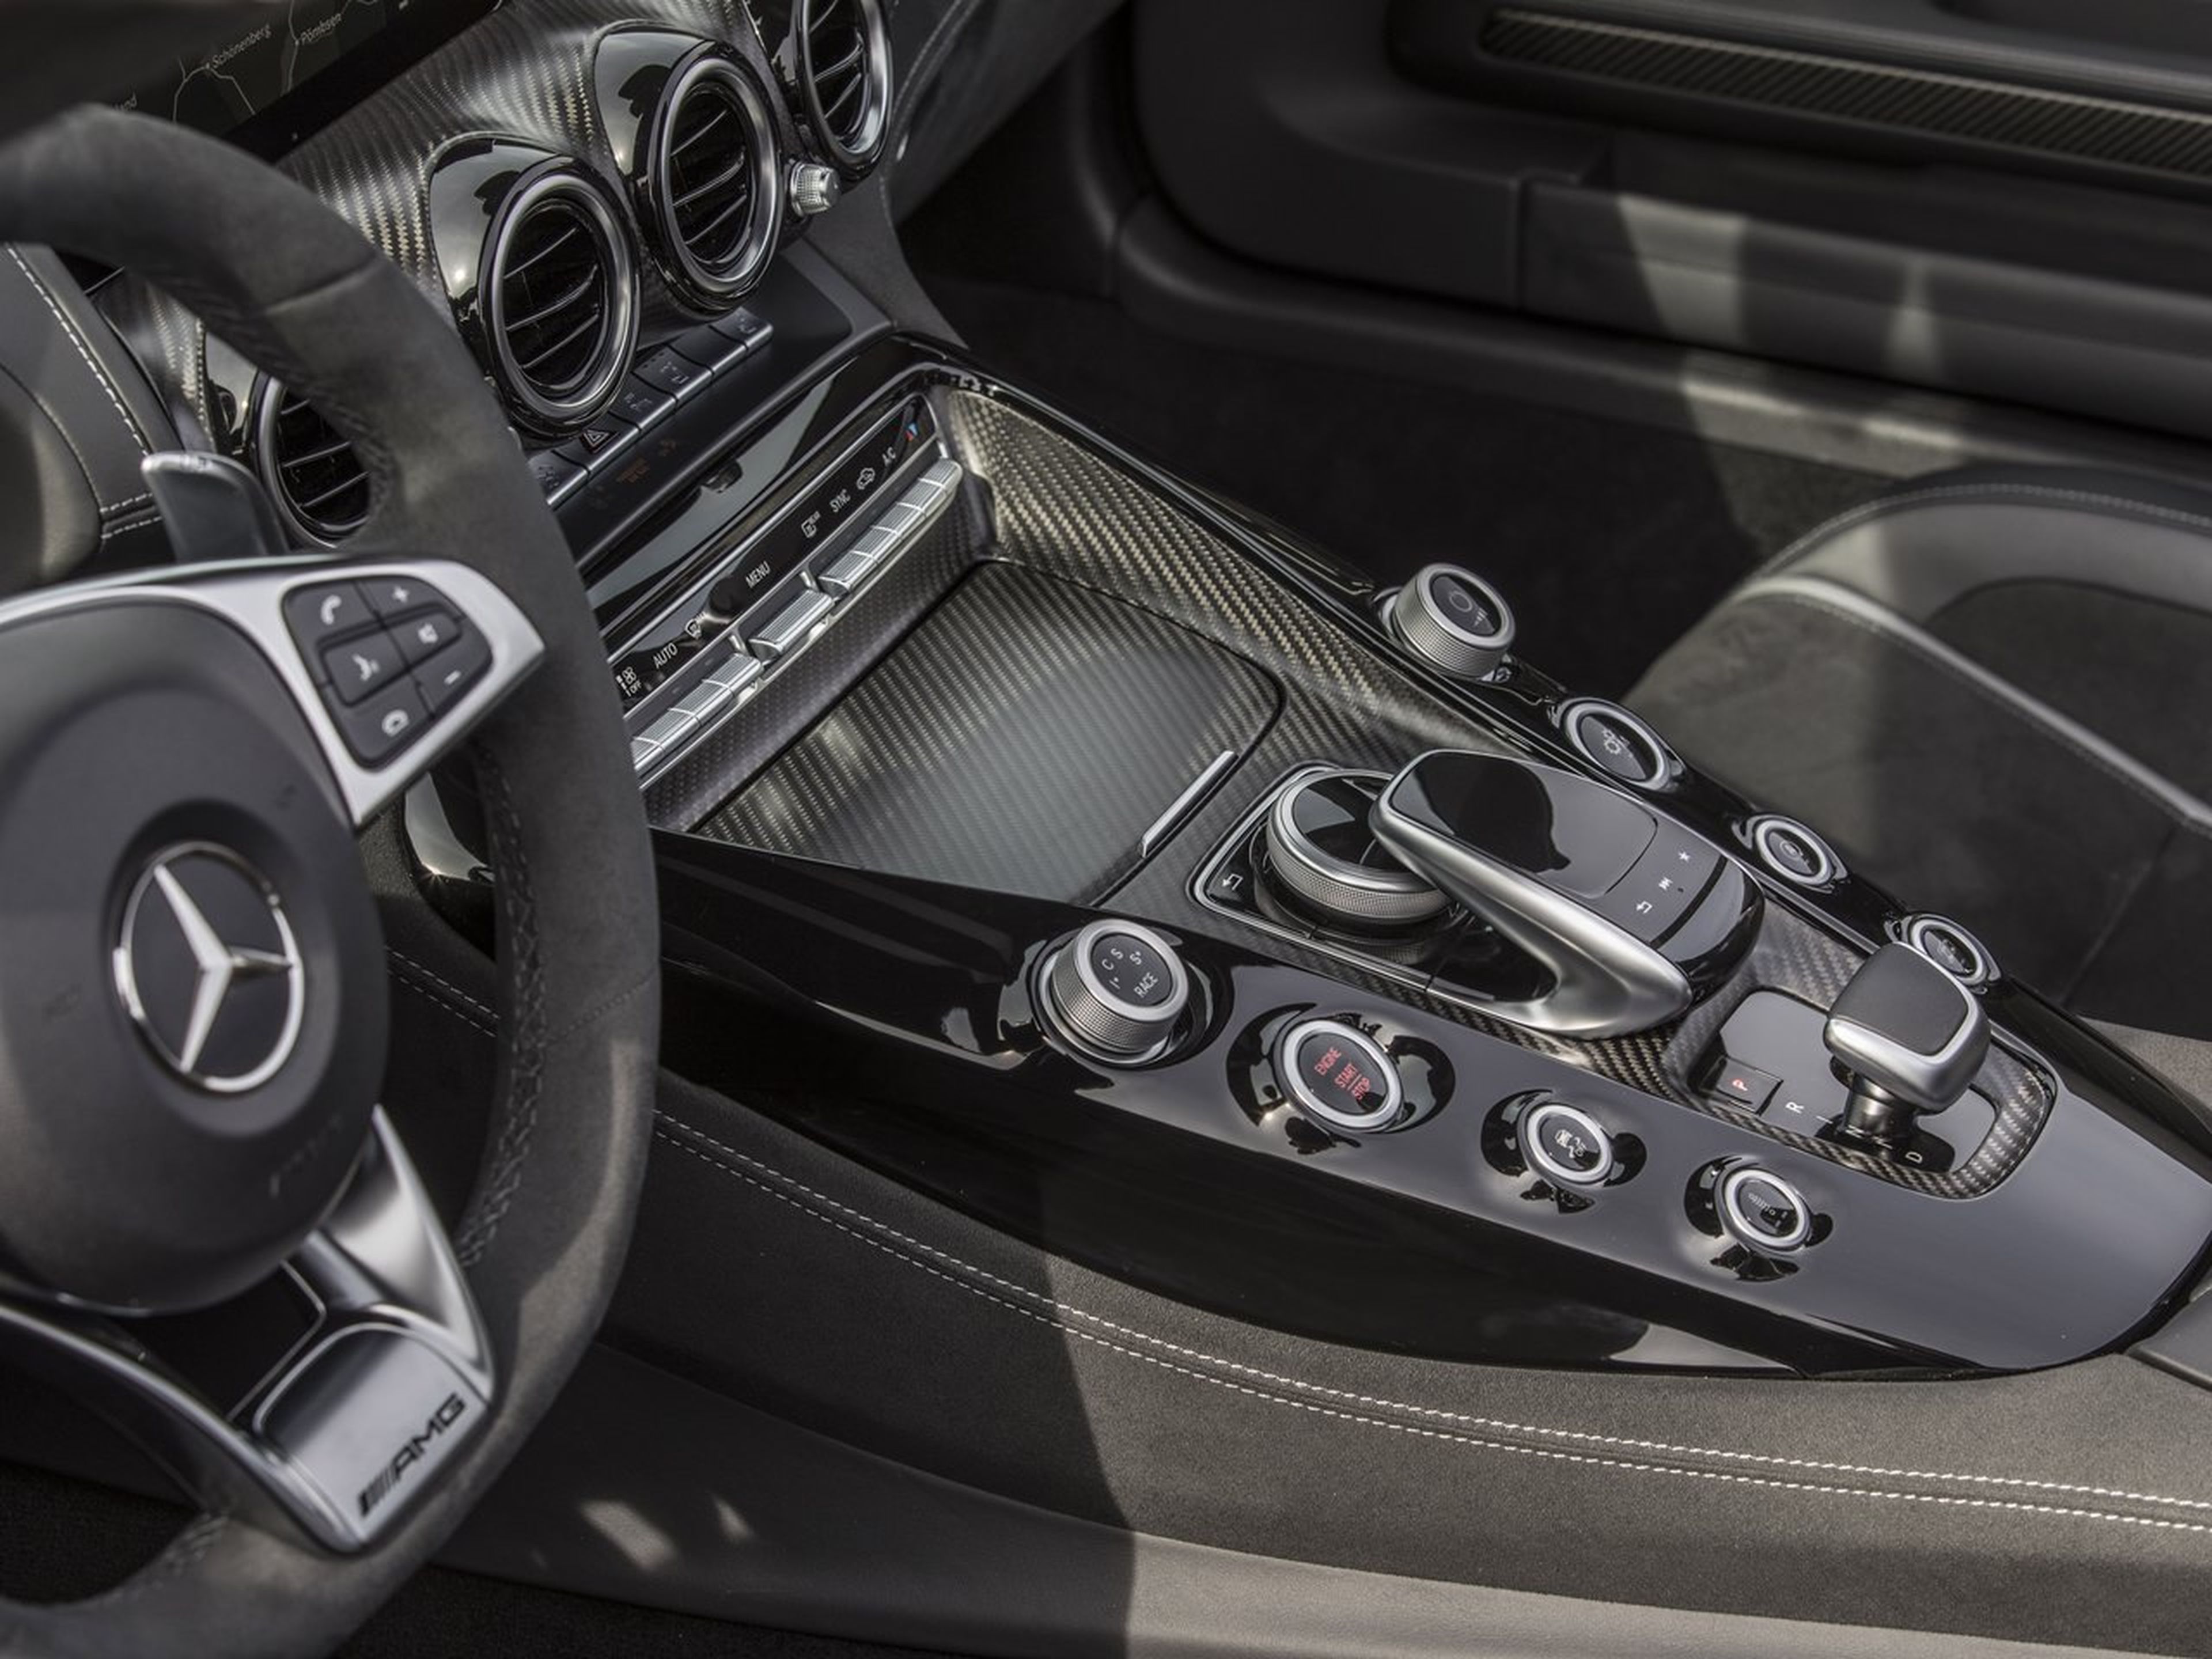 Mecedes AMG GT Roadster interior